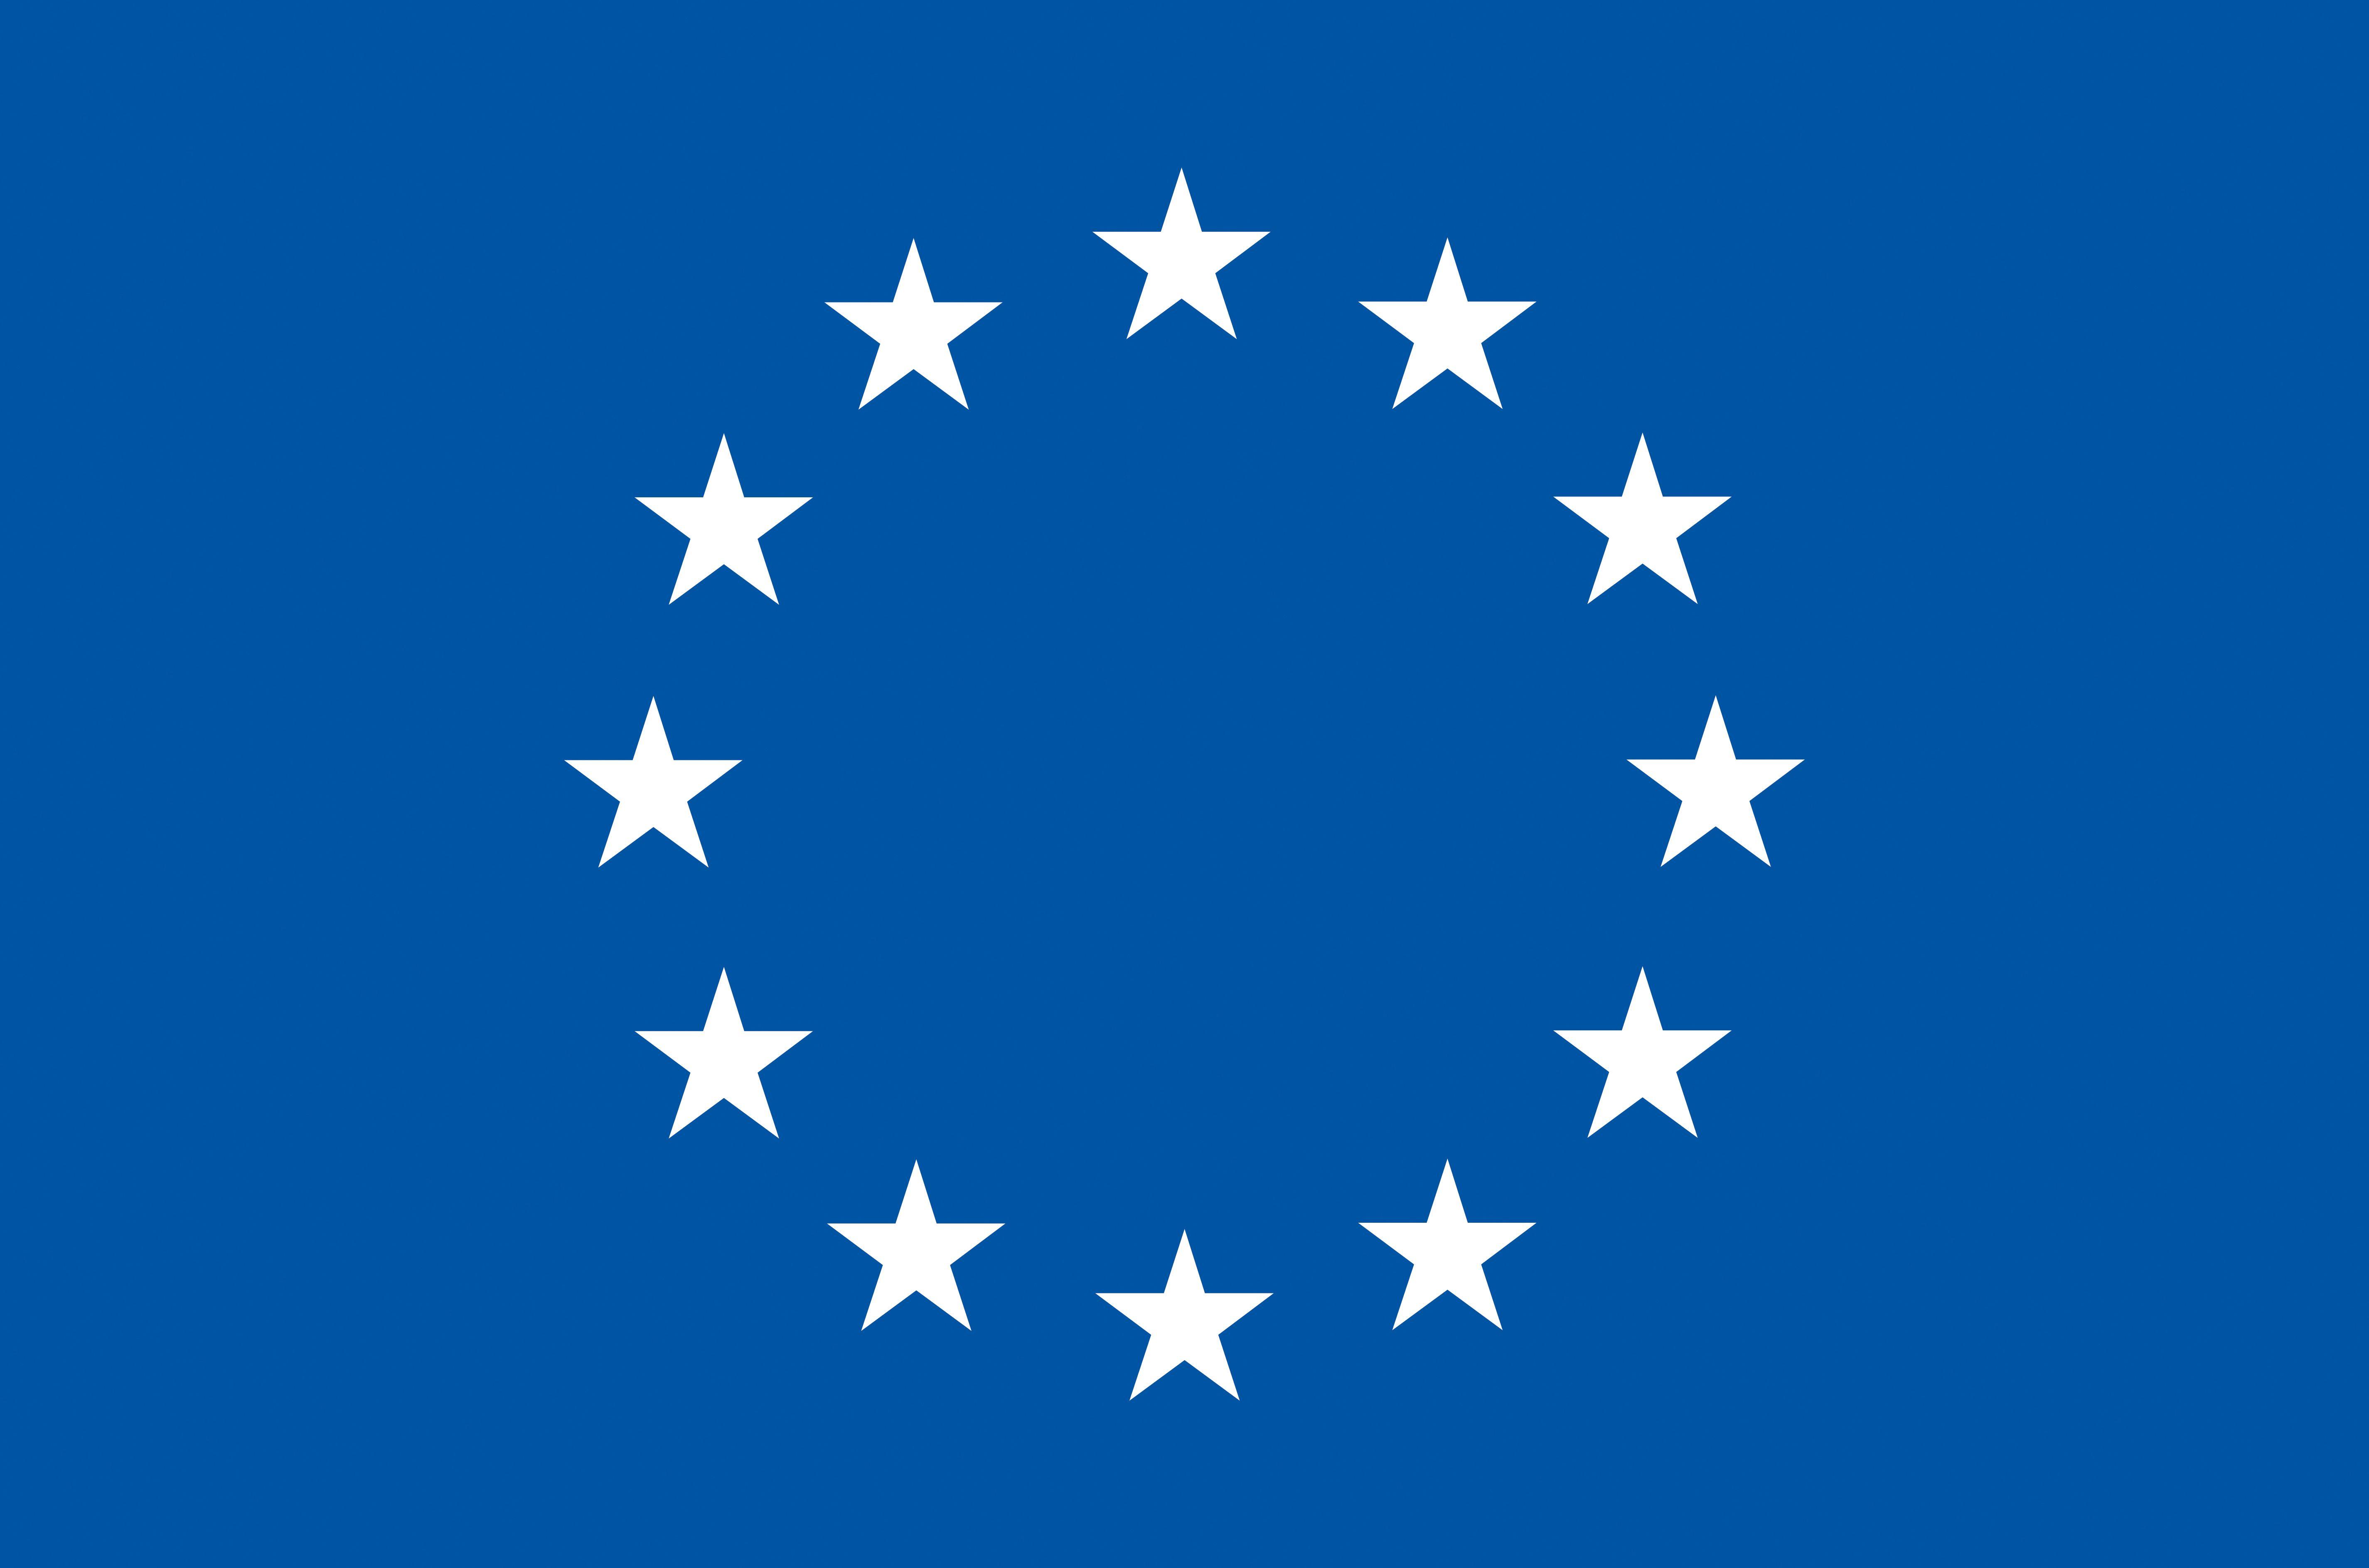 Blue and White Star Logo - The European flag